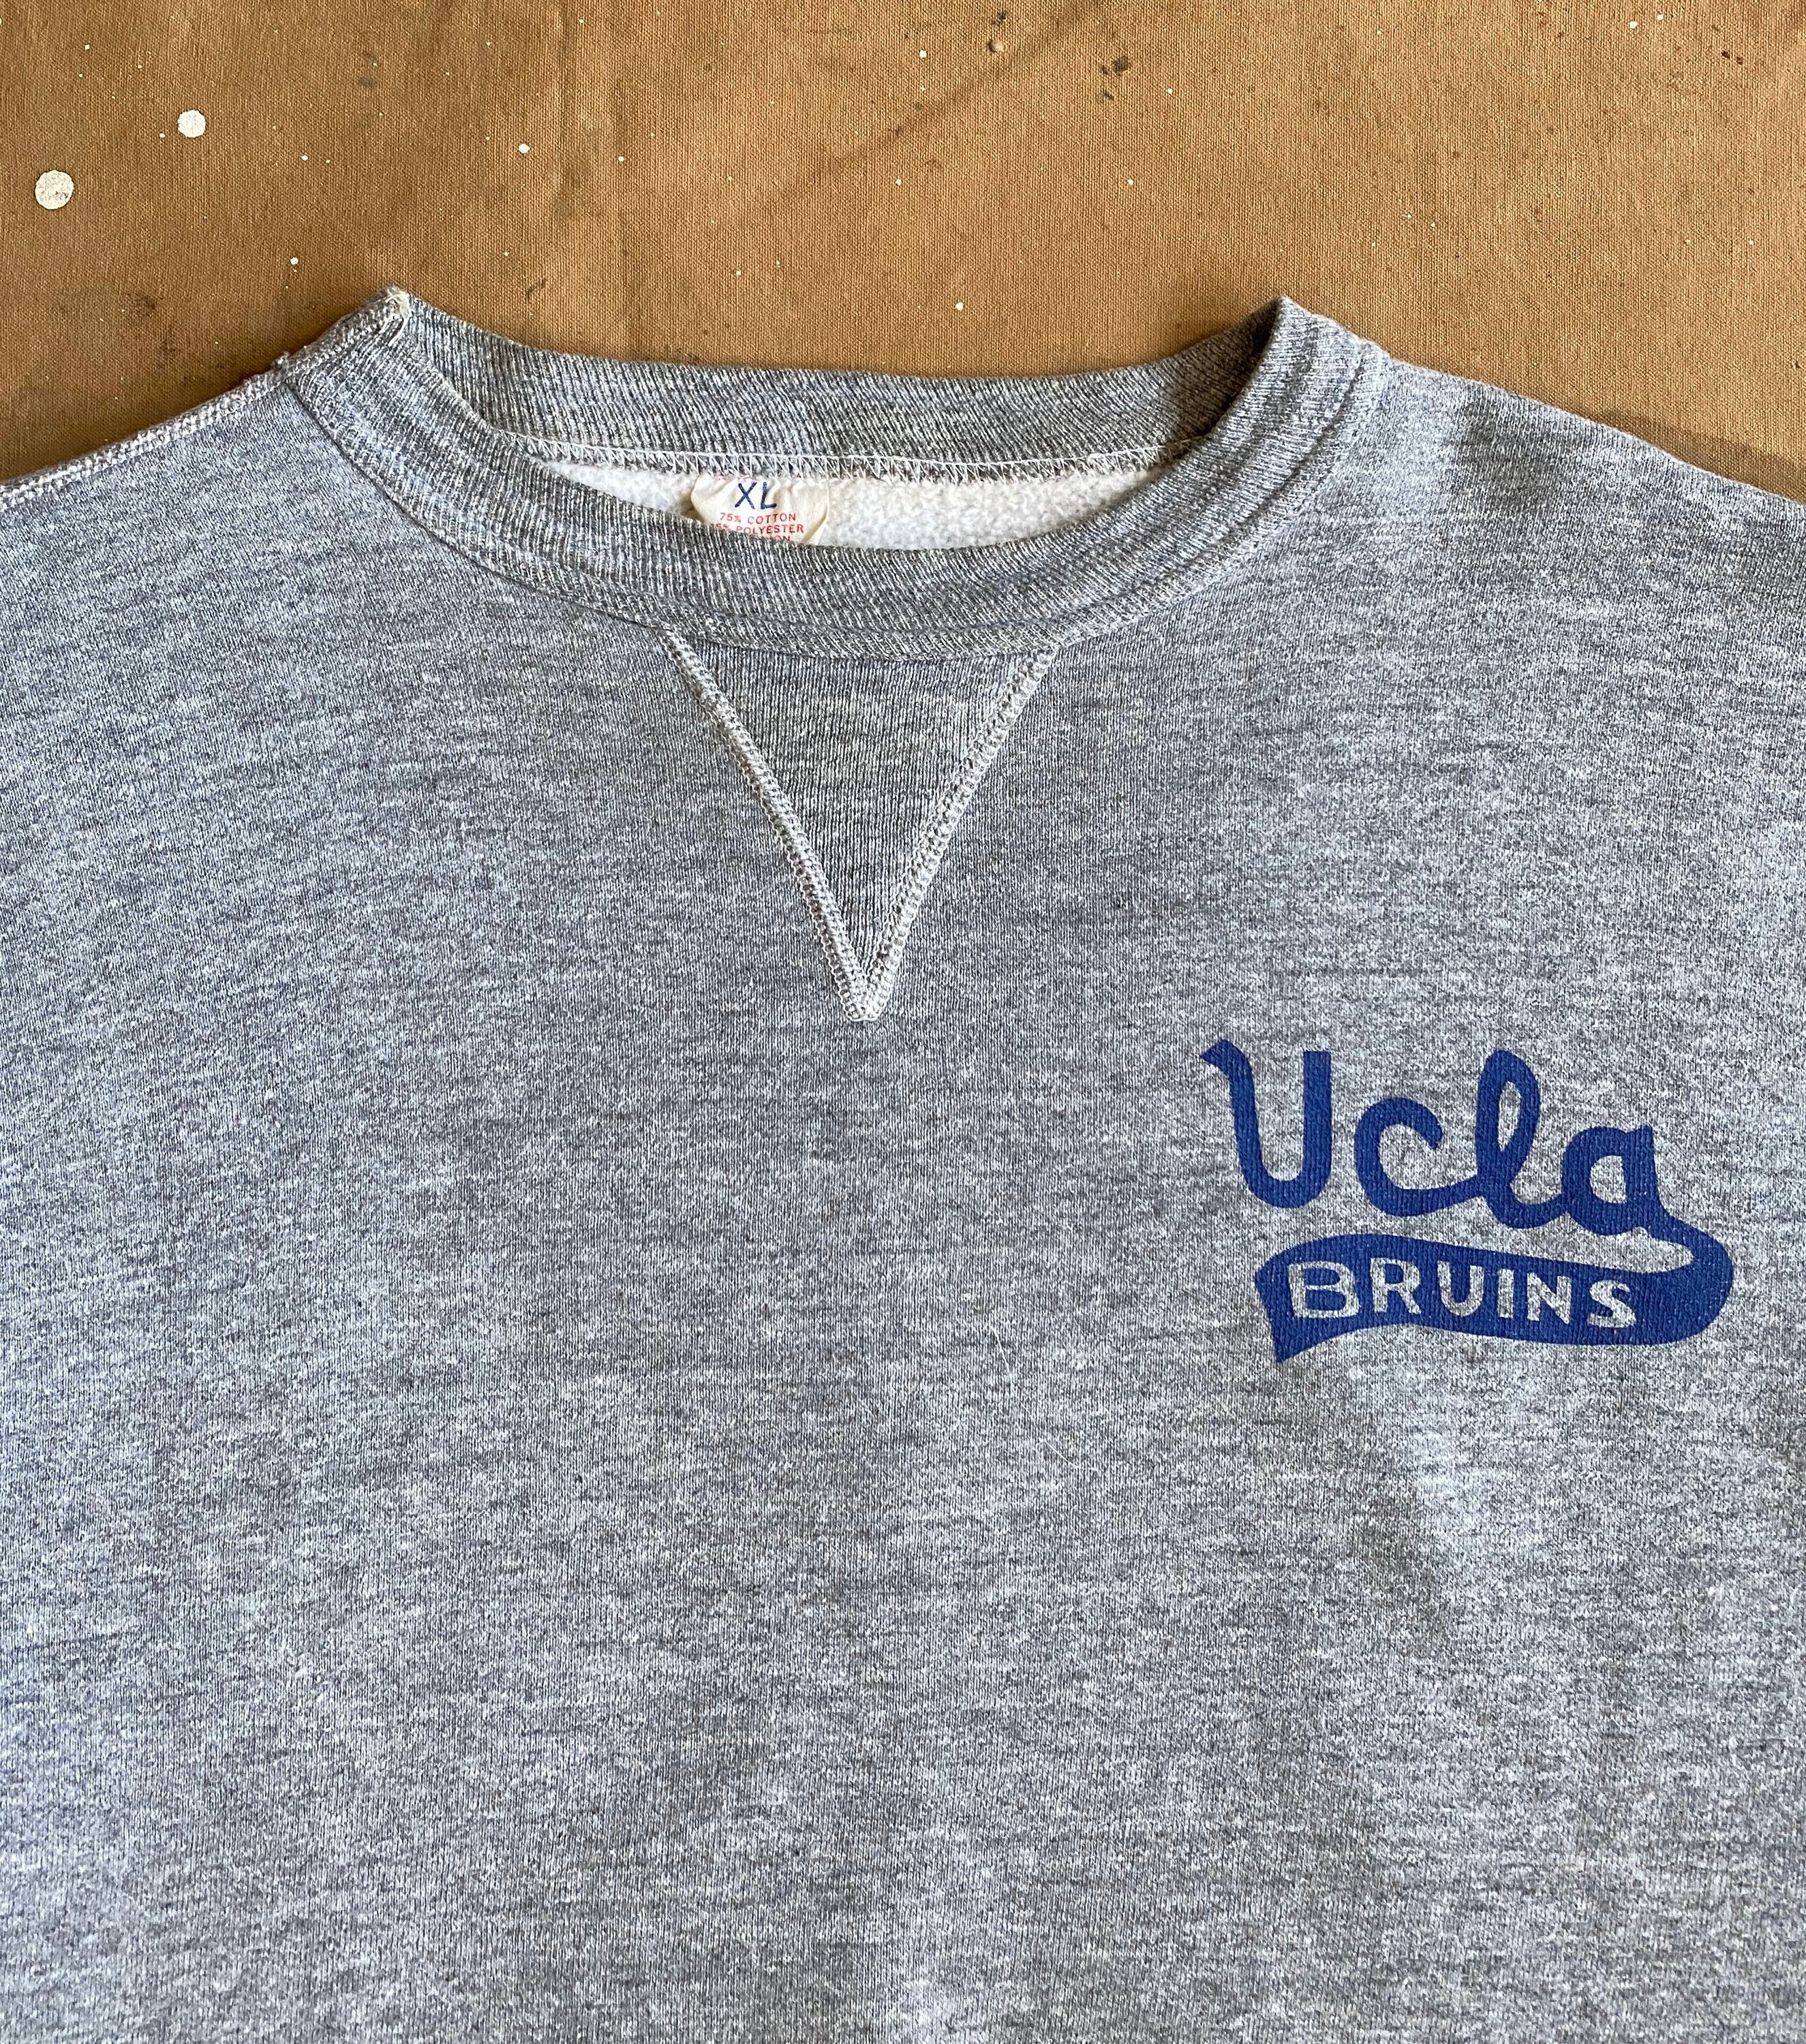 UCLA Bruins Champion Embroidered Crew Neck Sweatshirt